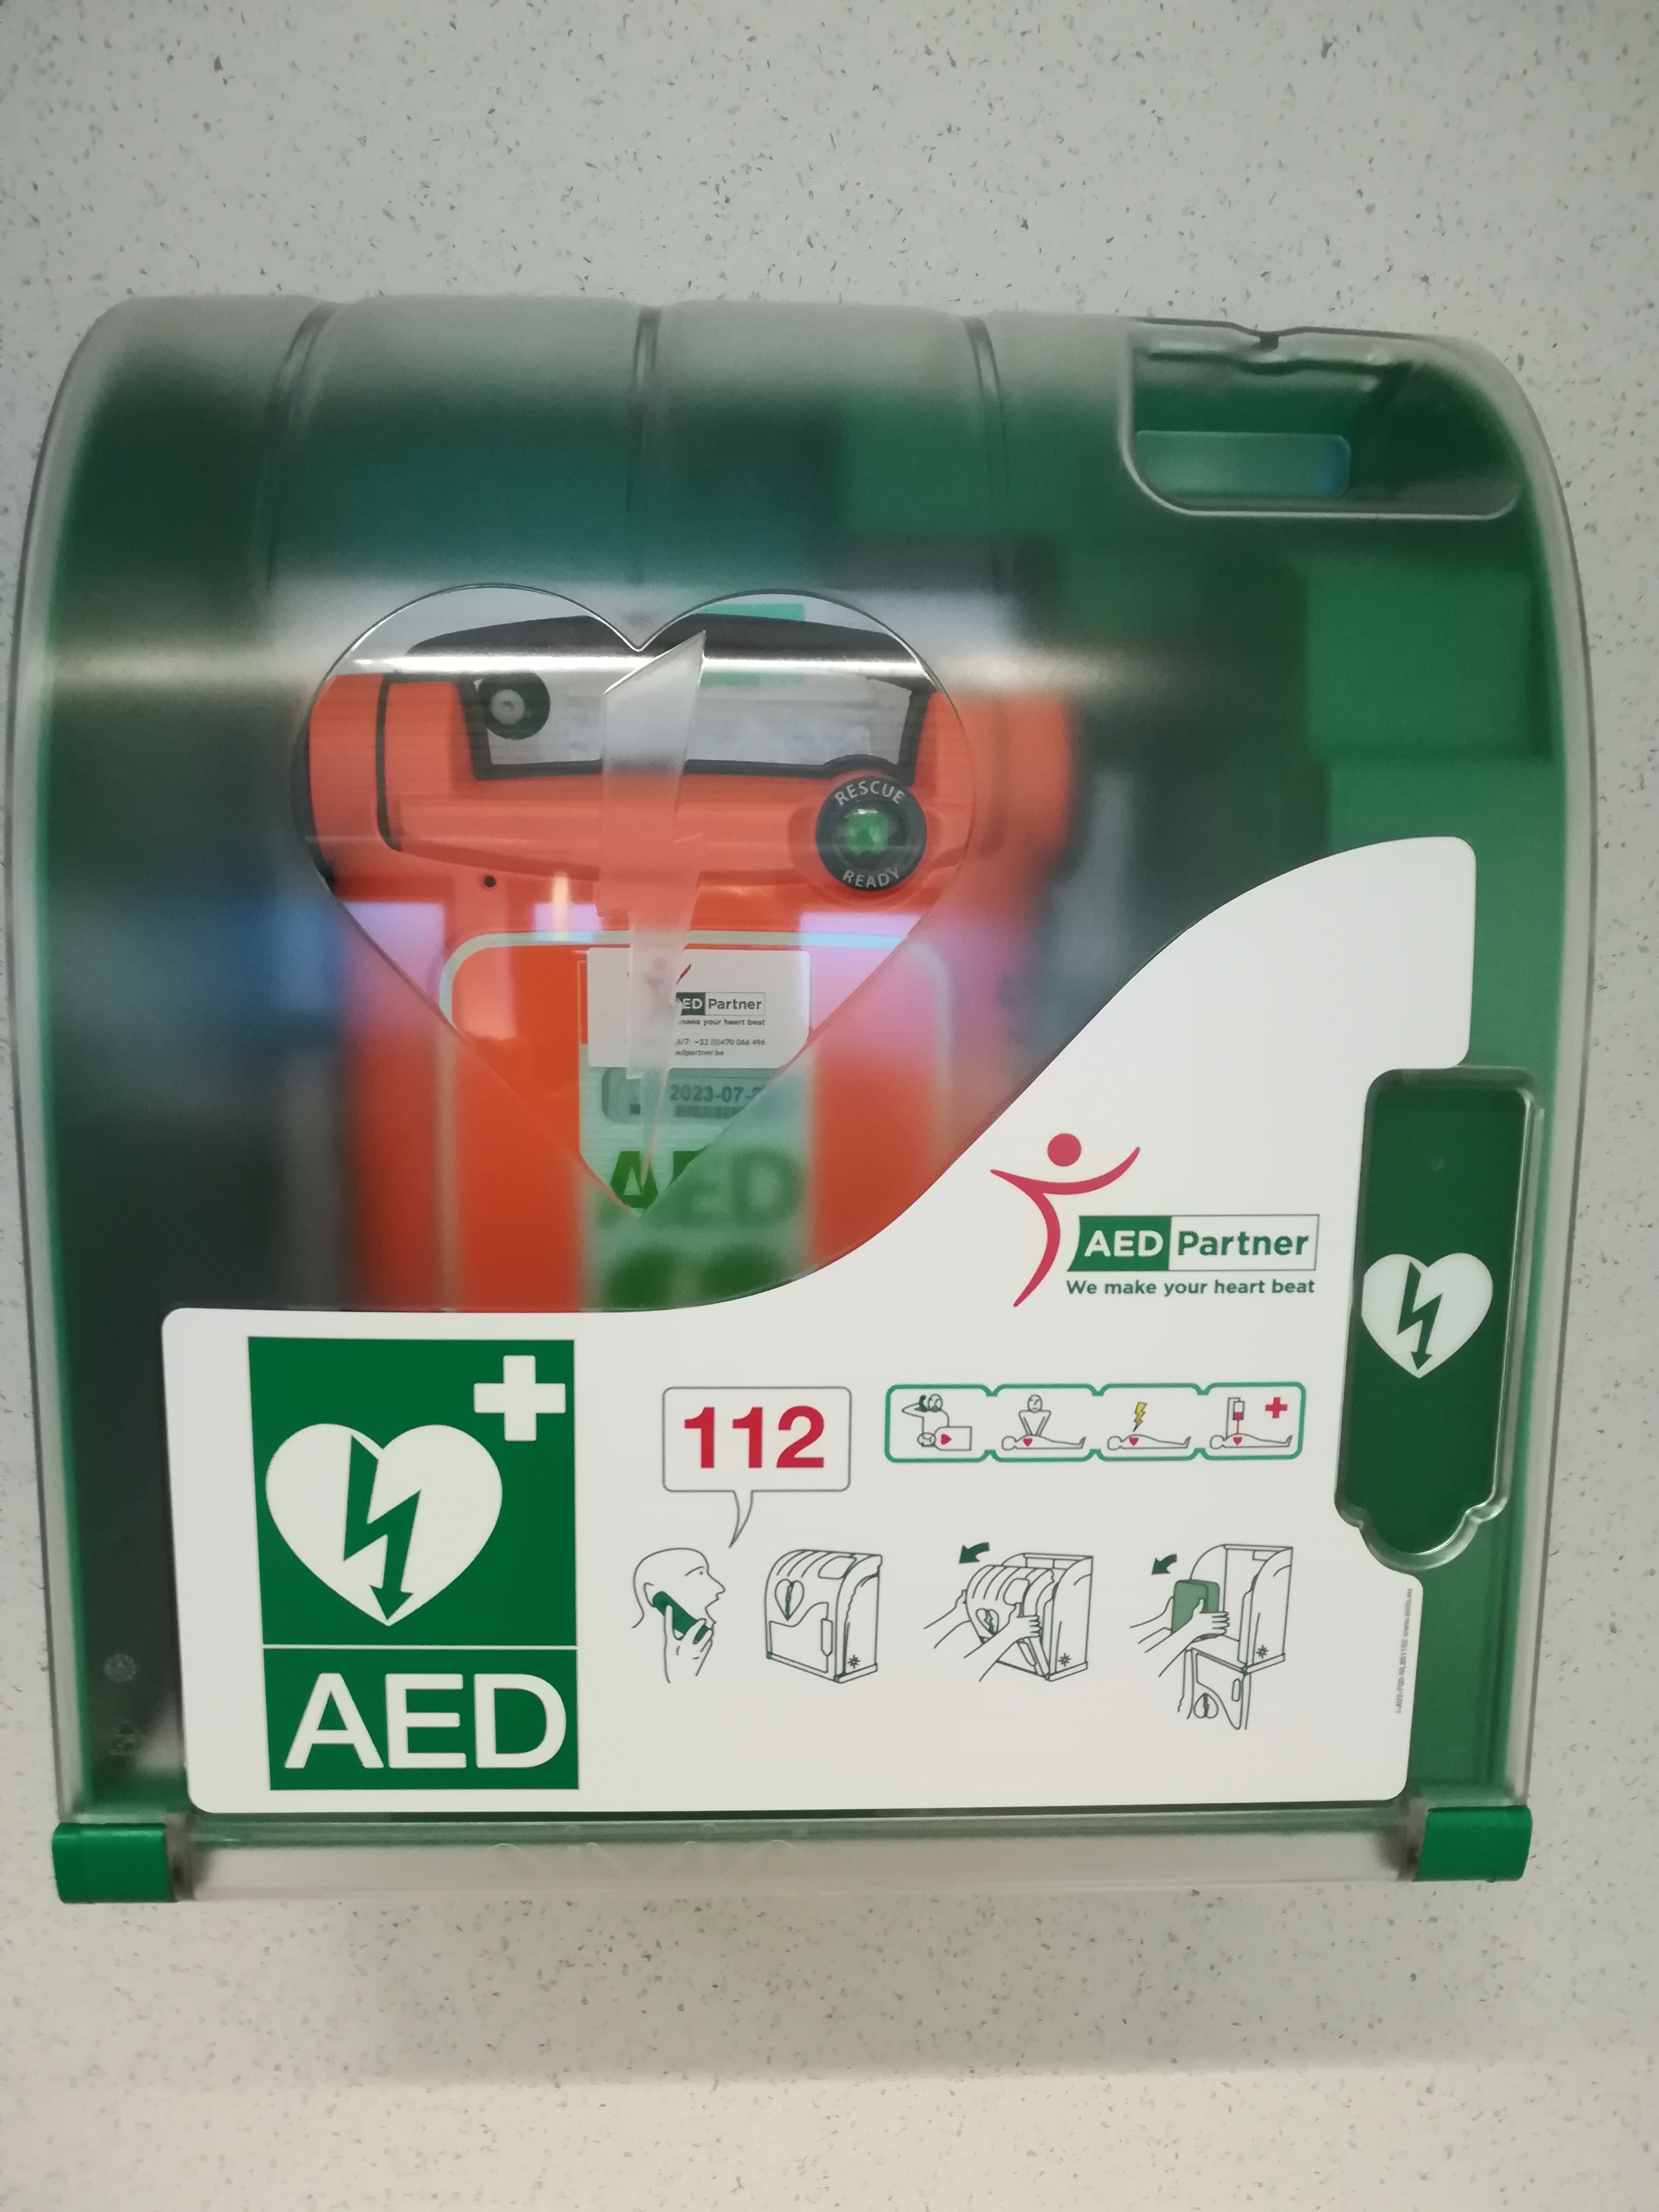 AED-toestel